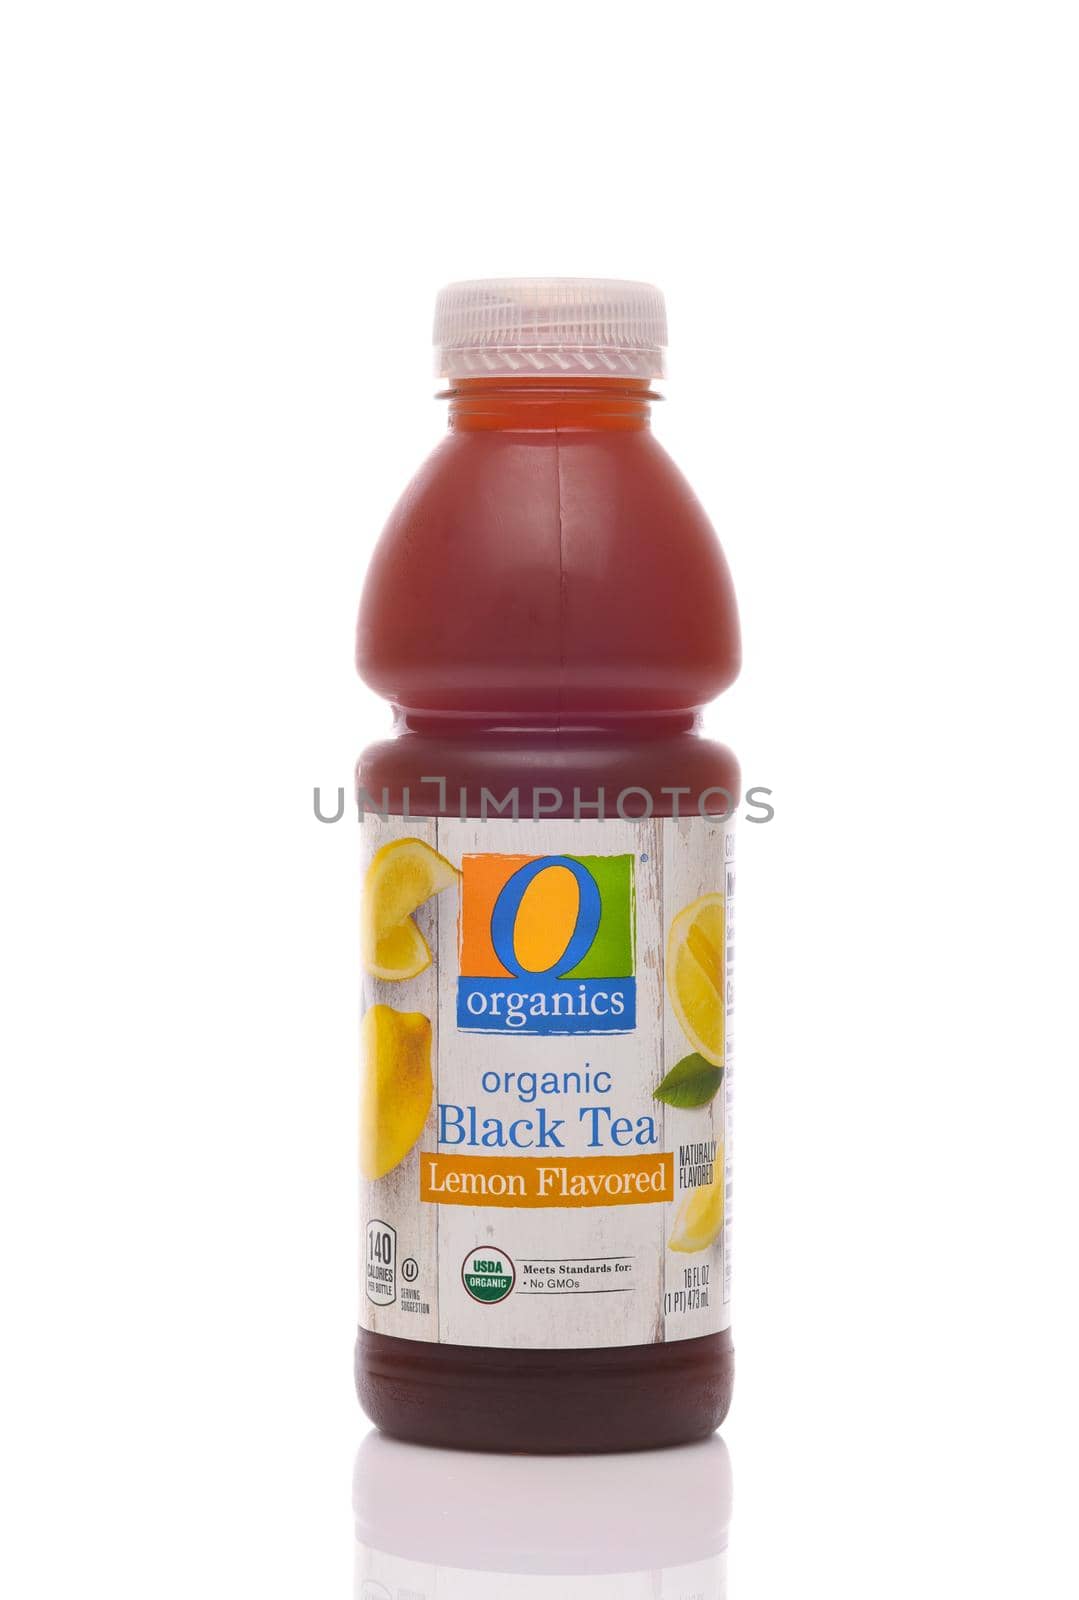 IRVINE, CALIFORNIA - MAY 20, 2019: A bottle of Organics Black Tea with Lemon Flavor. 